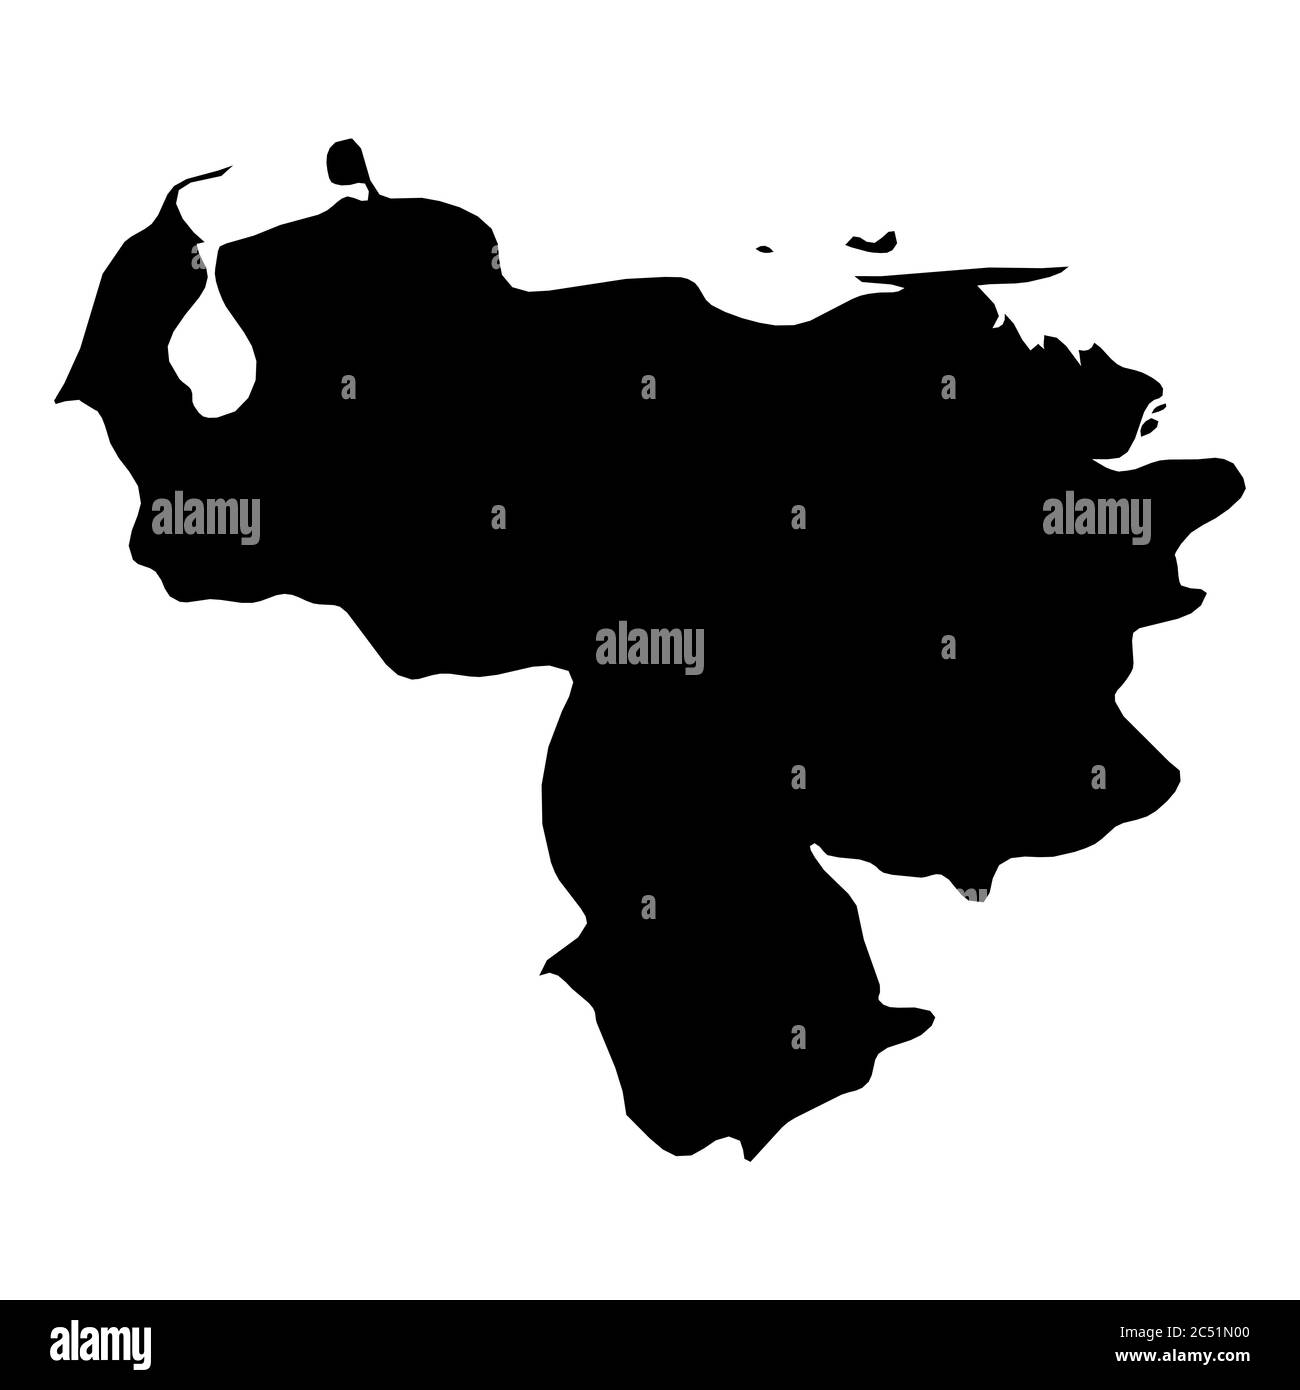 Venezuela Mapa De Silueta Negra Sólida De La Zona Del País